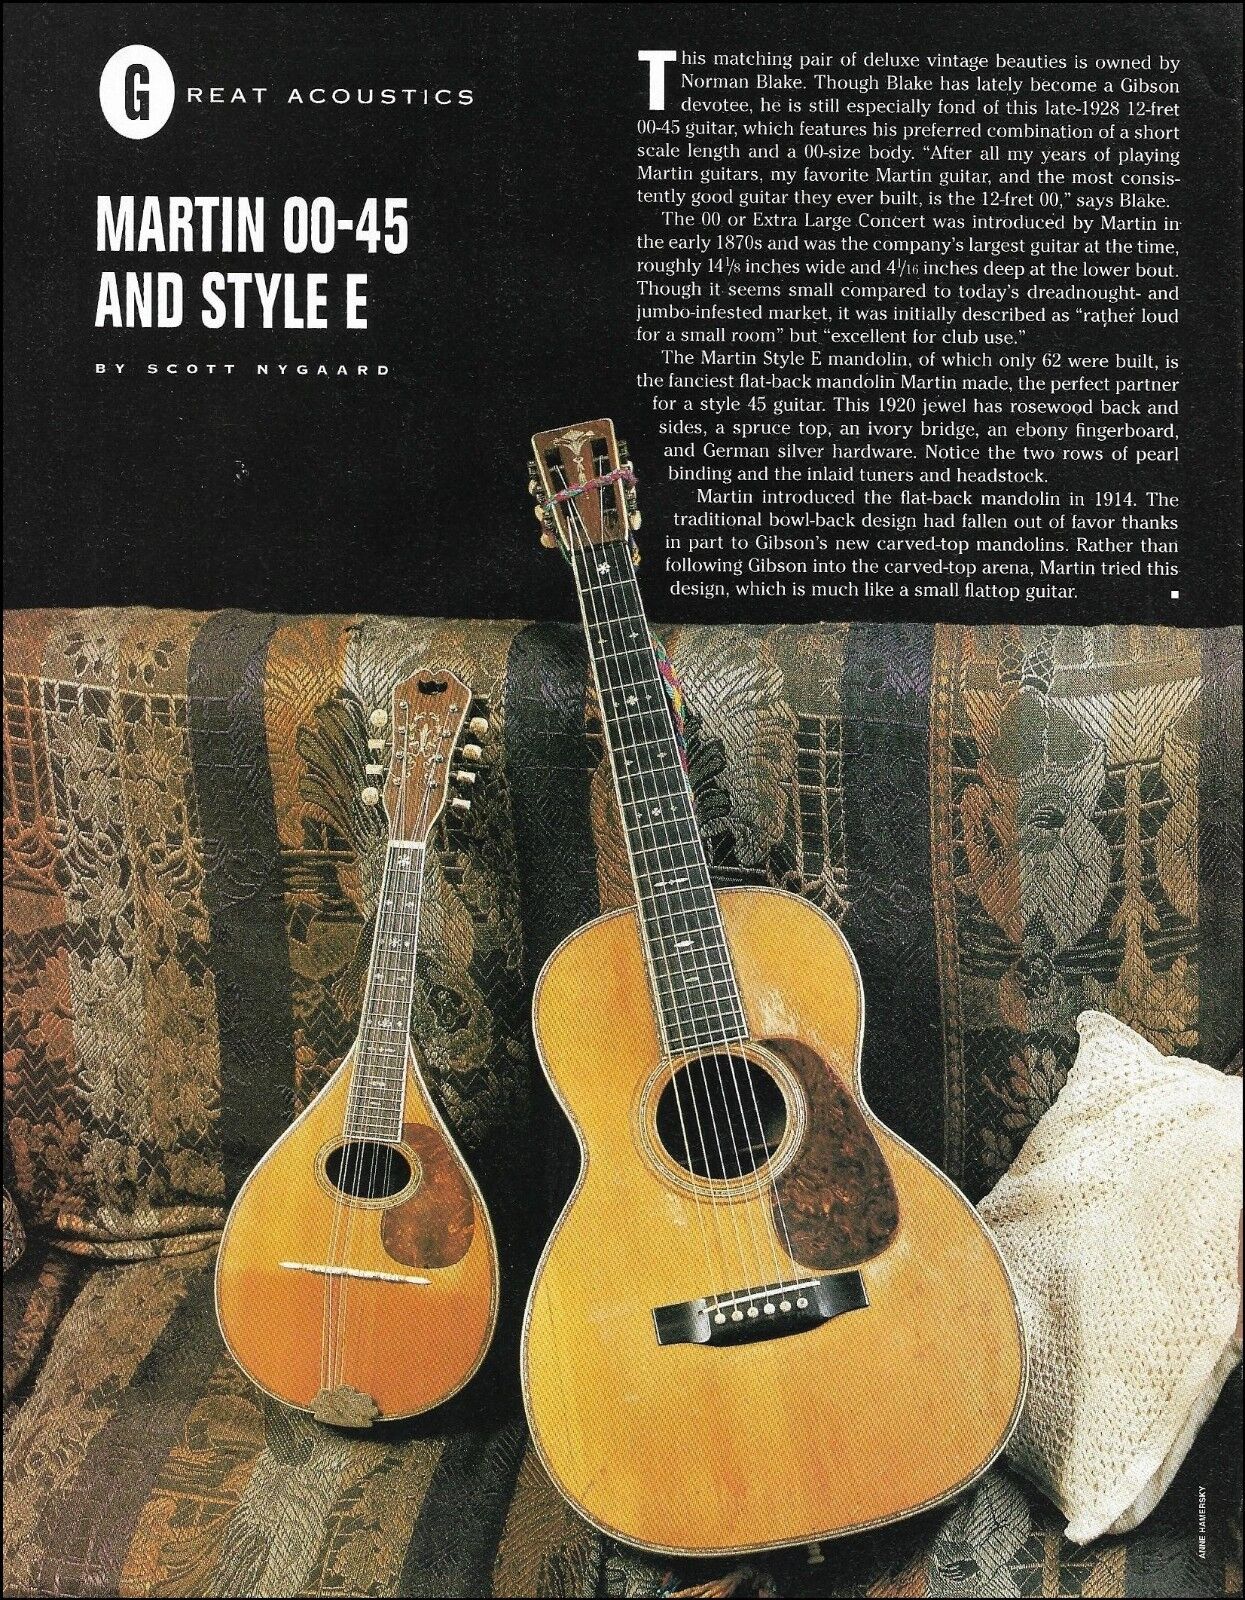 1928 Martin 00-45 vintage acoustic guitar & 1920 Style E mandolin article photo